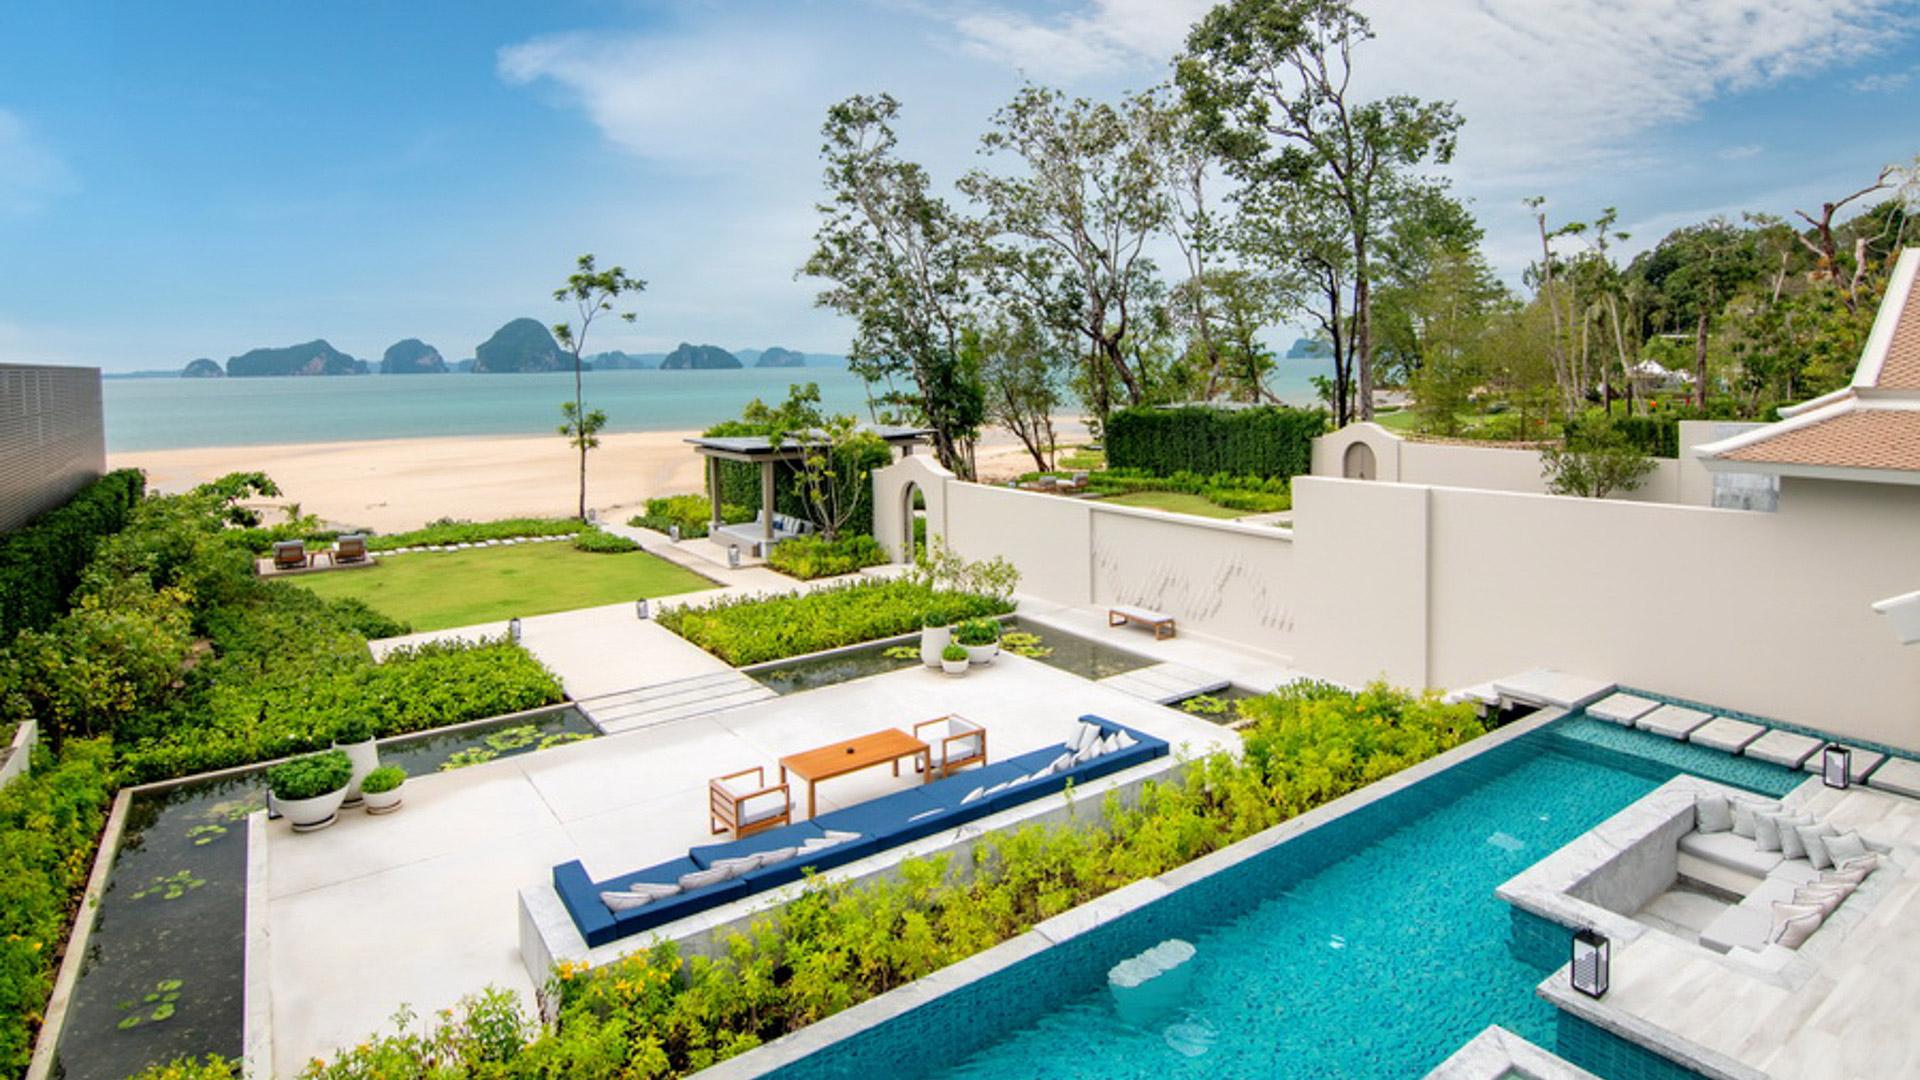 Banyan Tree Thailand Krabi Accommodation - Presidential Beachfront Pool Villa View from Above